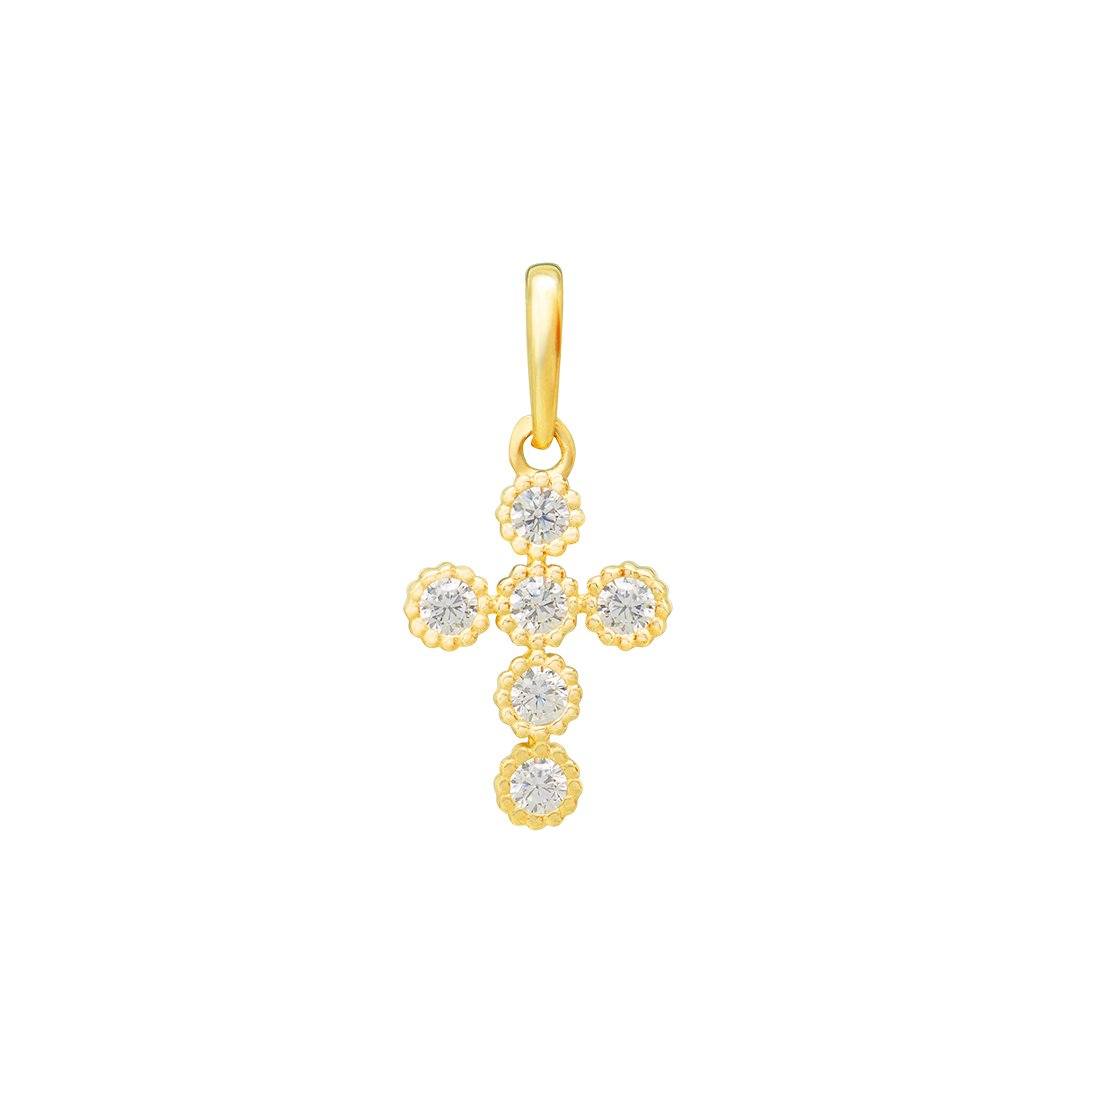 Cubic Zirconia Cross Pendant in 9ct Yellow Gold Necklaces Bevilles 